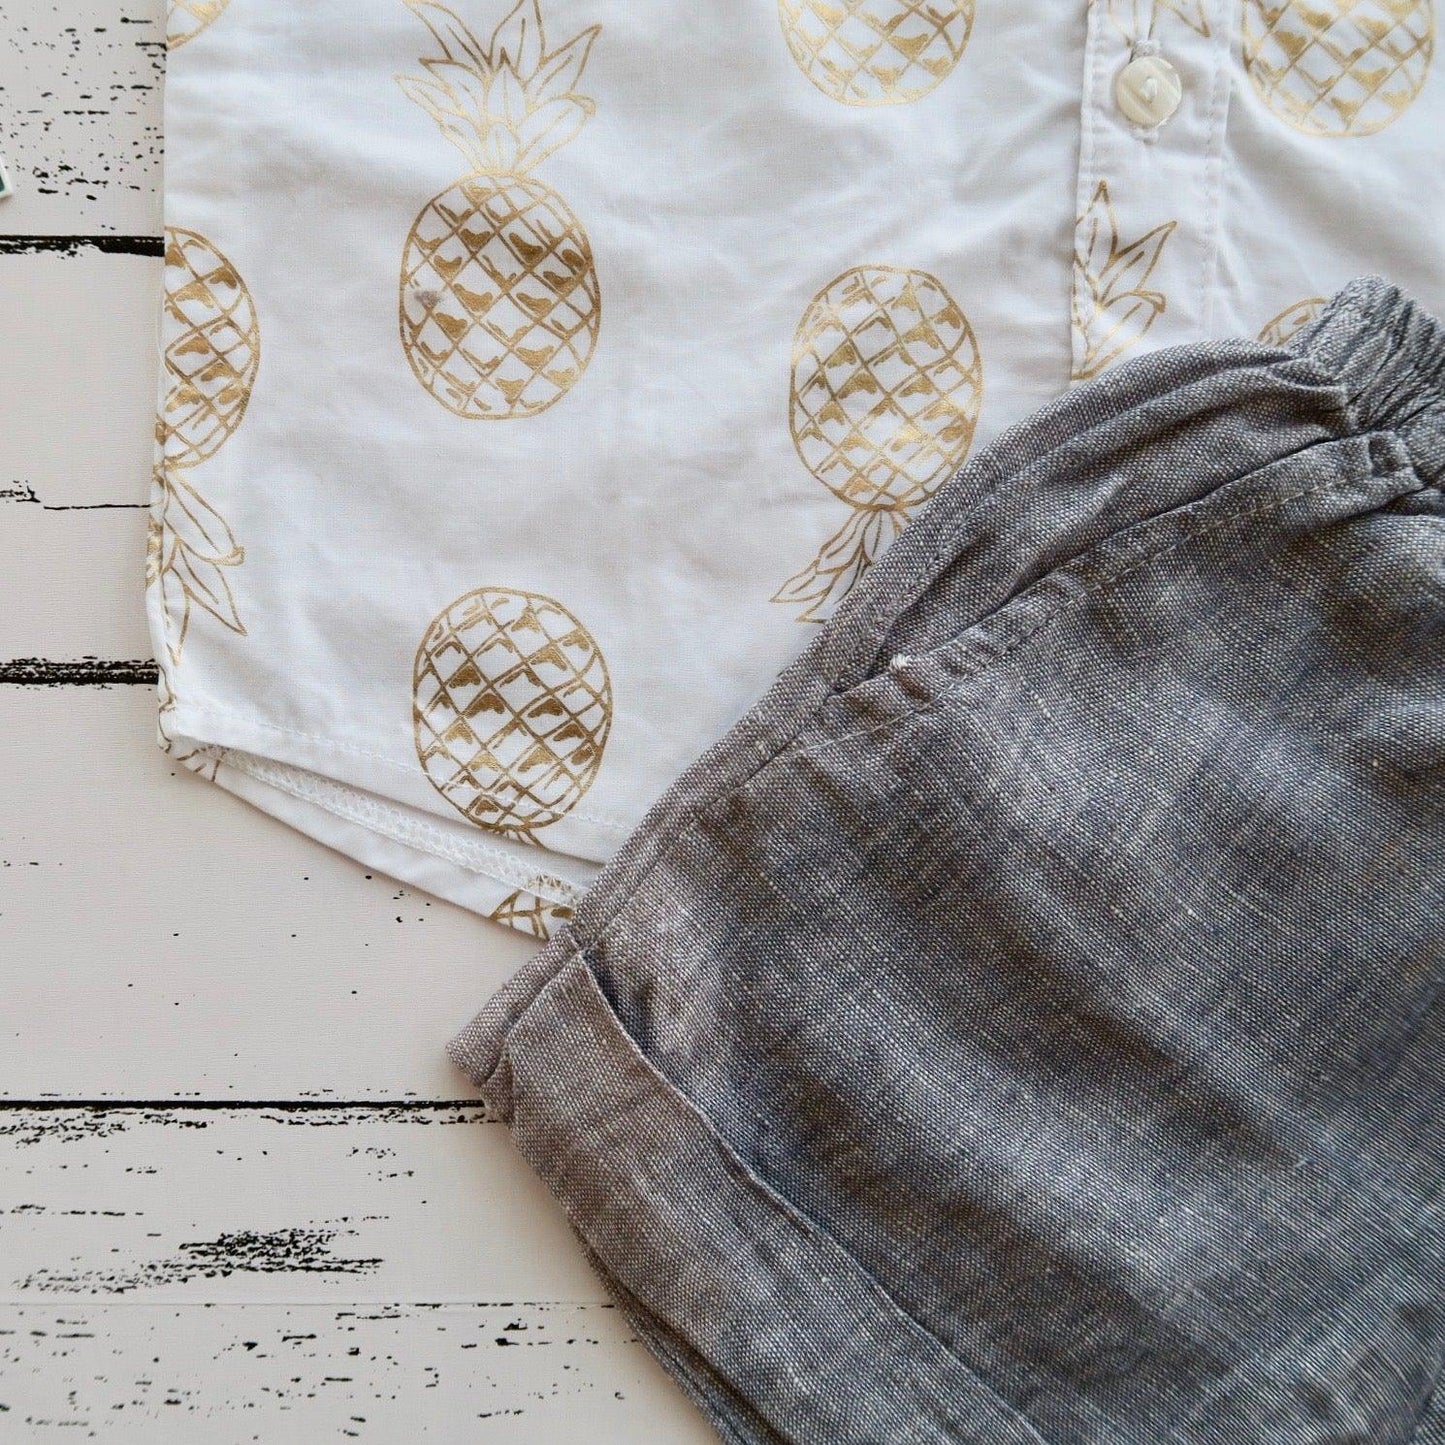 Cedar Top & Shorts in Golden Pineapple and Gray Linen - Lil' Tati